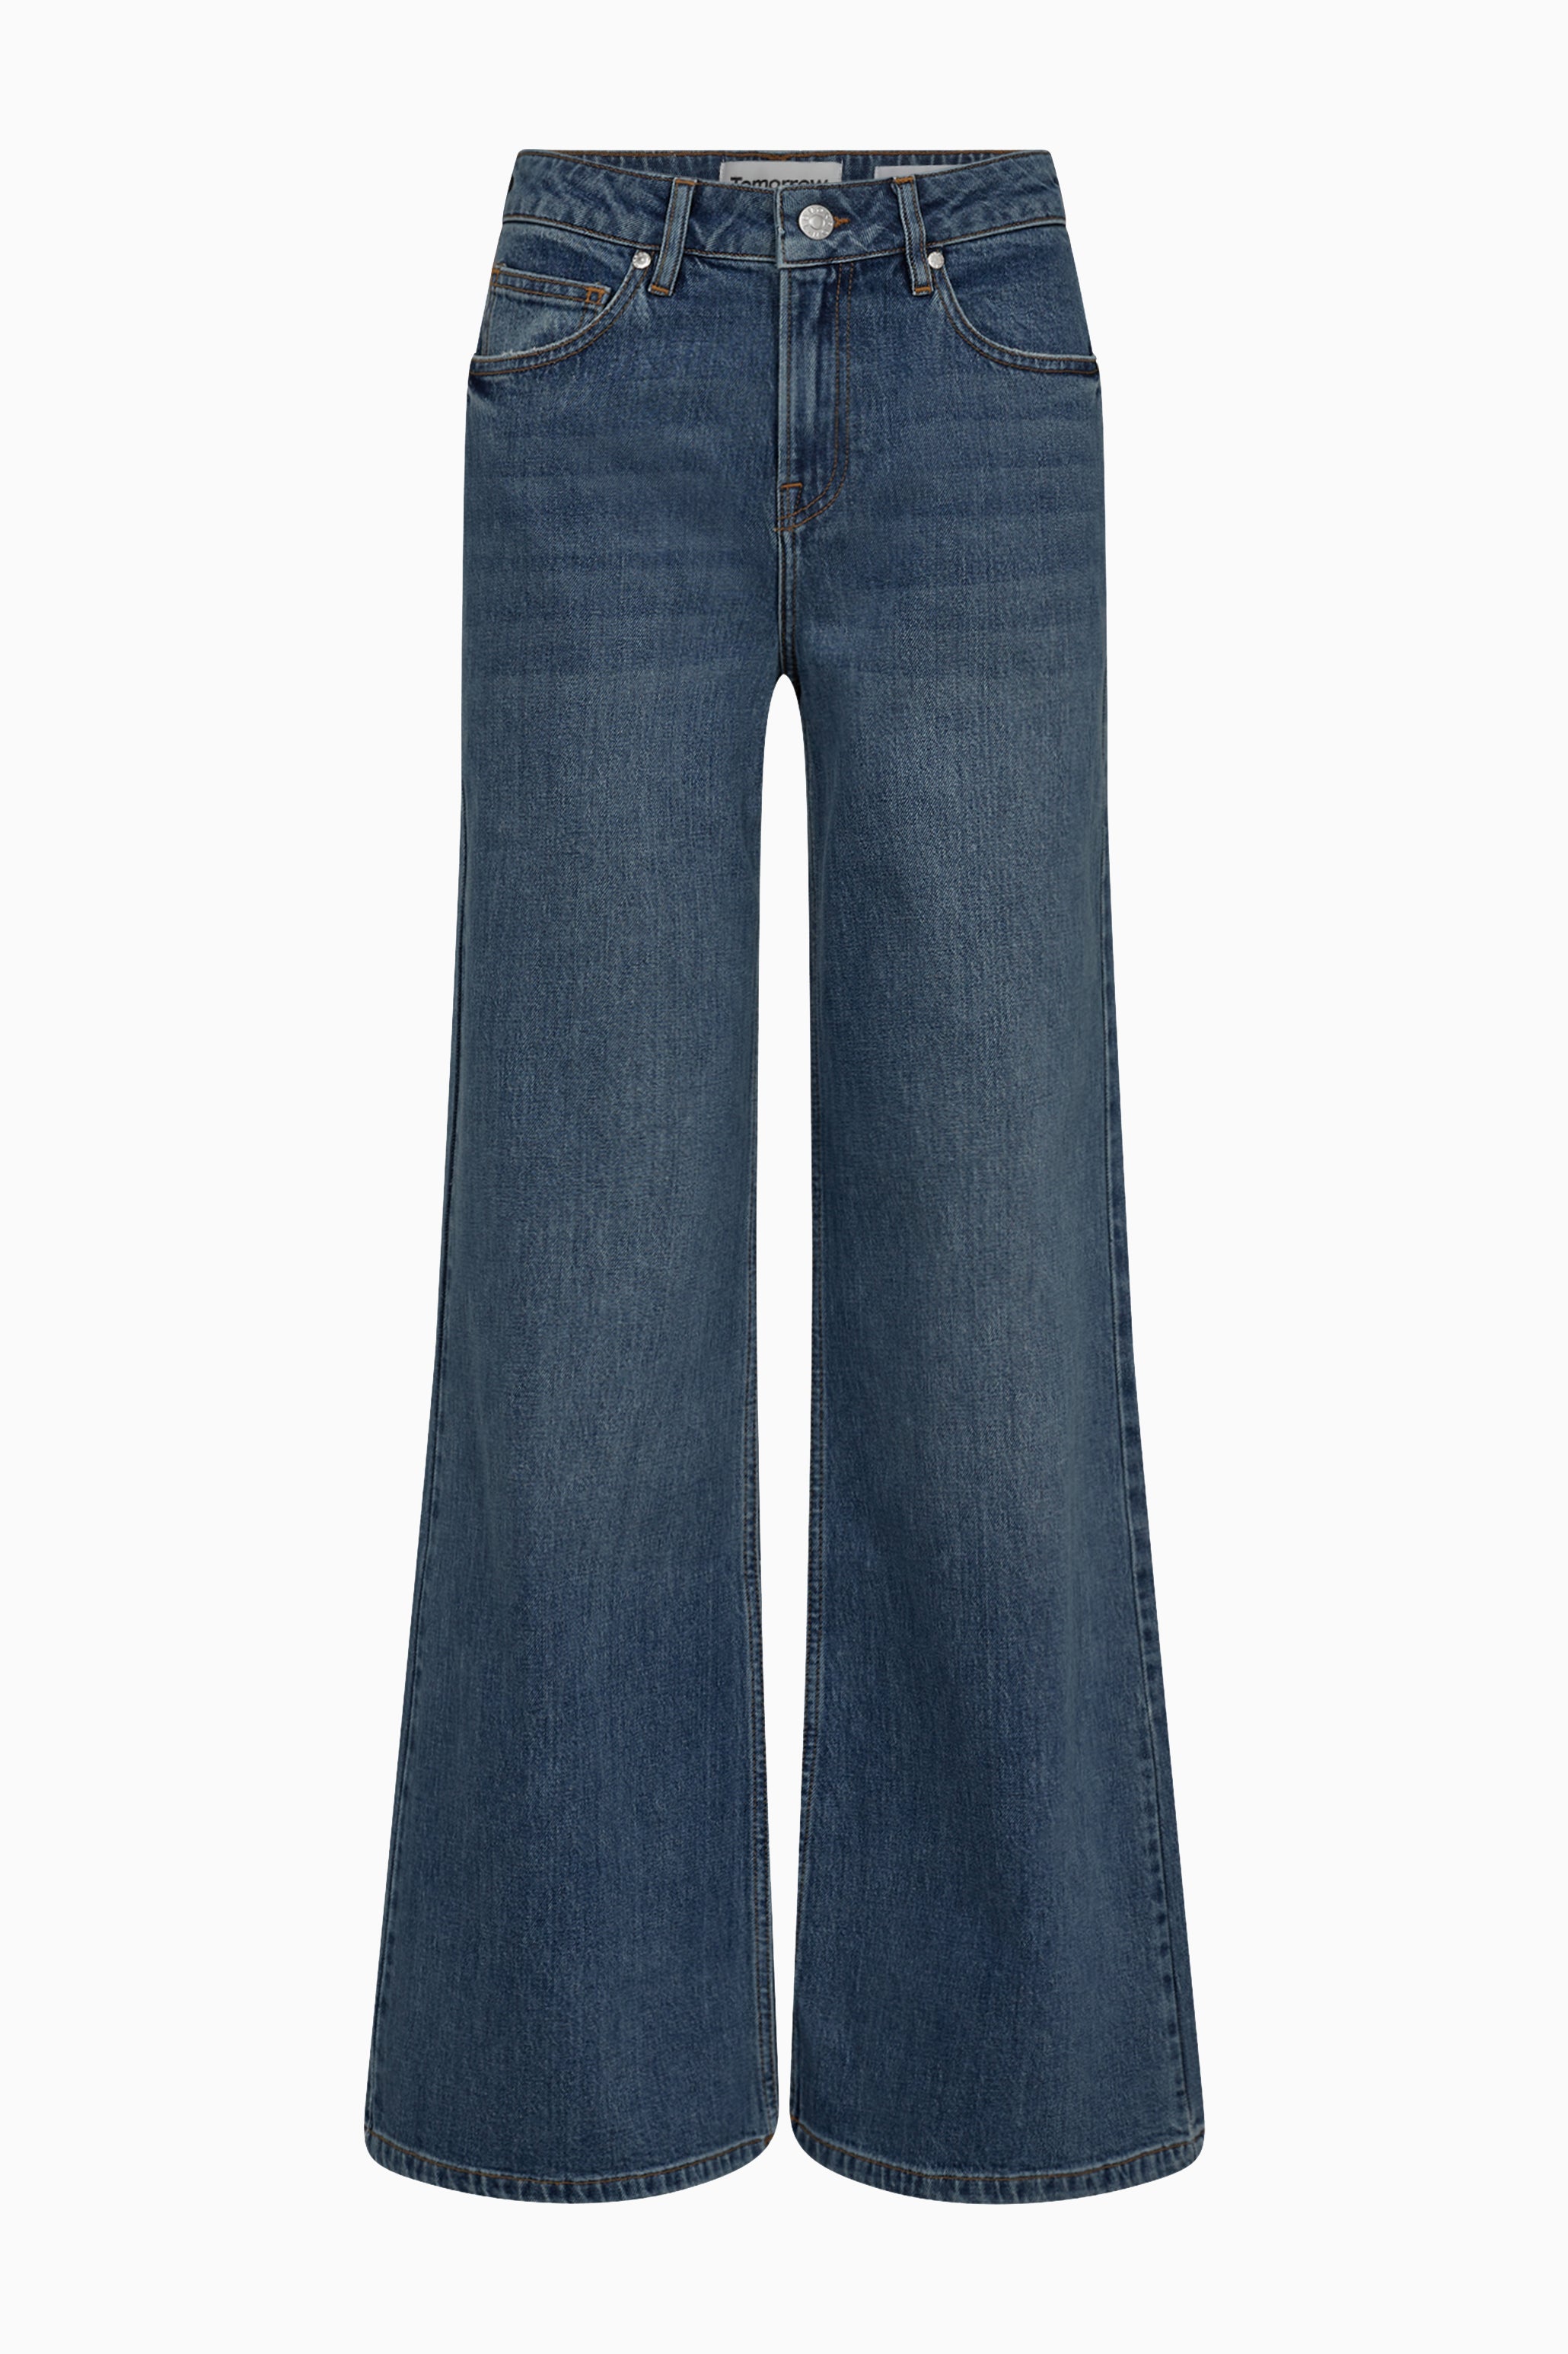 Tomorrow TMRW Kersee Jeans - Perugia Jeans & Pants 51 Denim Blue